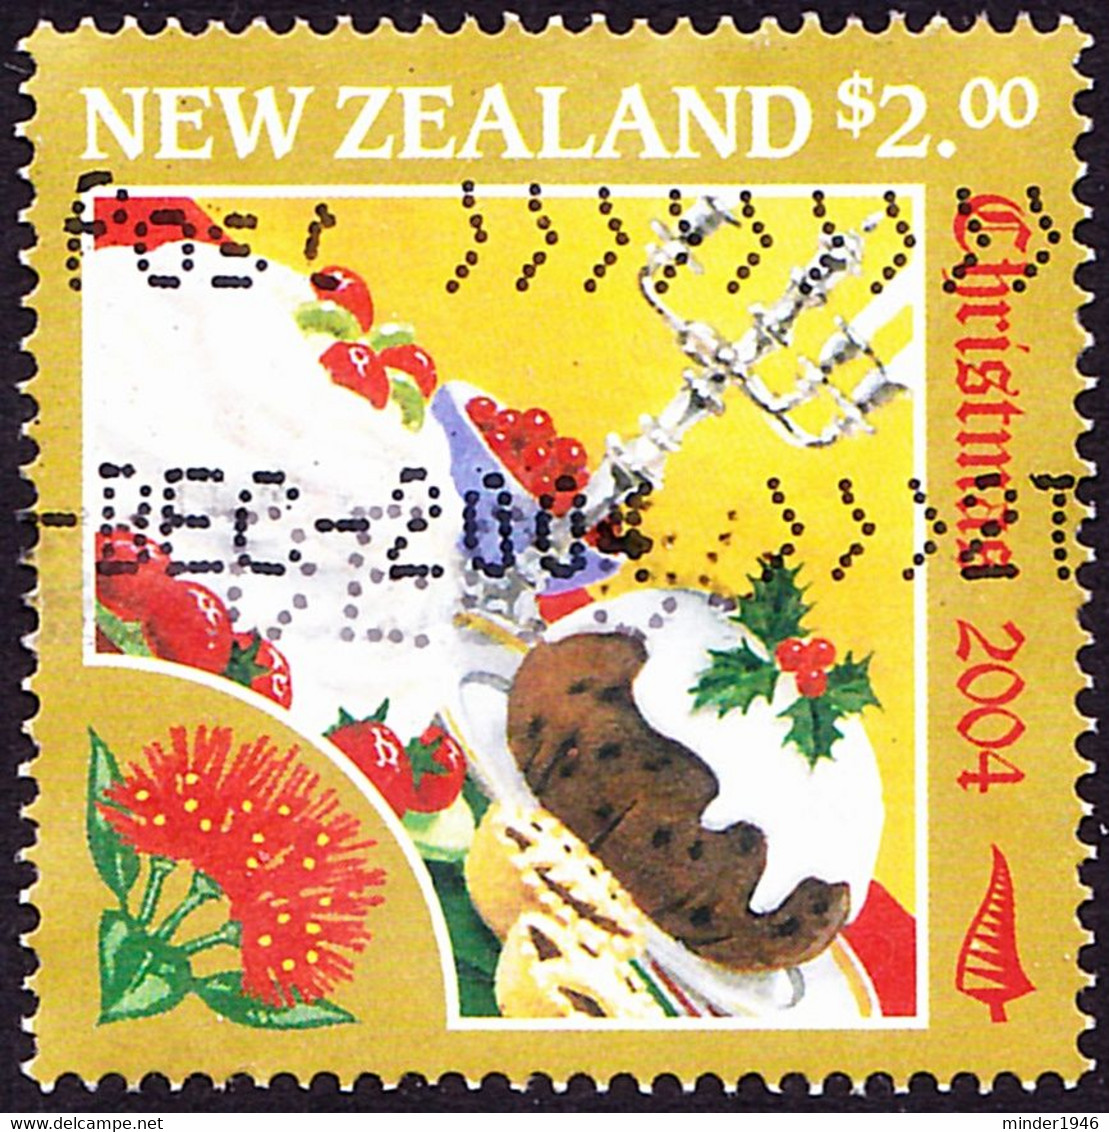 NEW ZEALAND 2004 QEII $2 Multicoloured, Christmas-Food SG2747 FU - Gebruikt